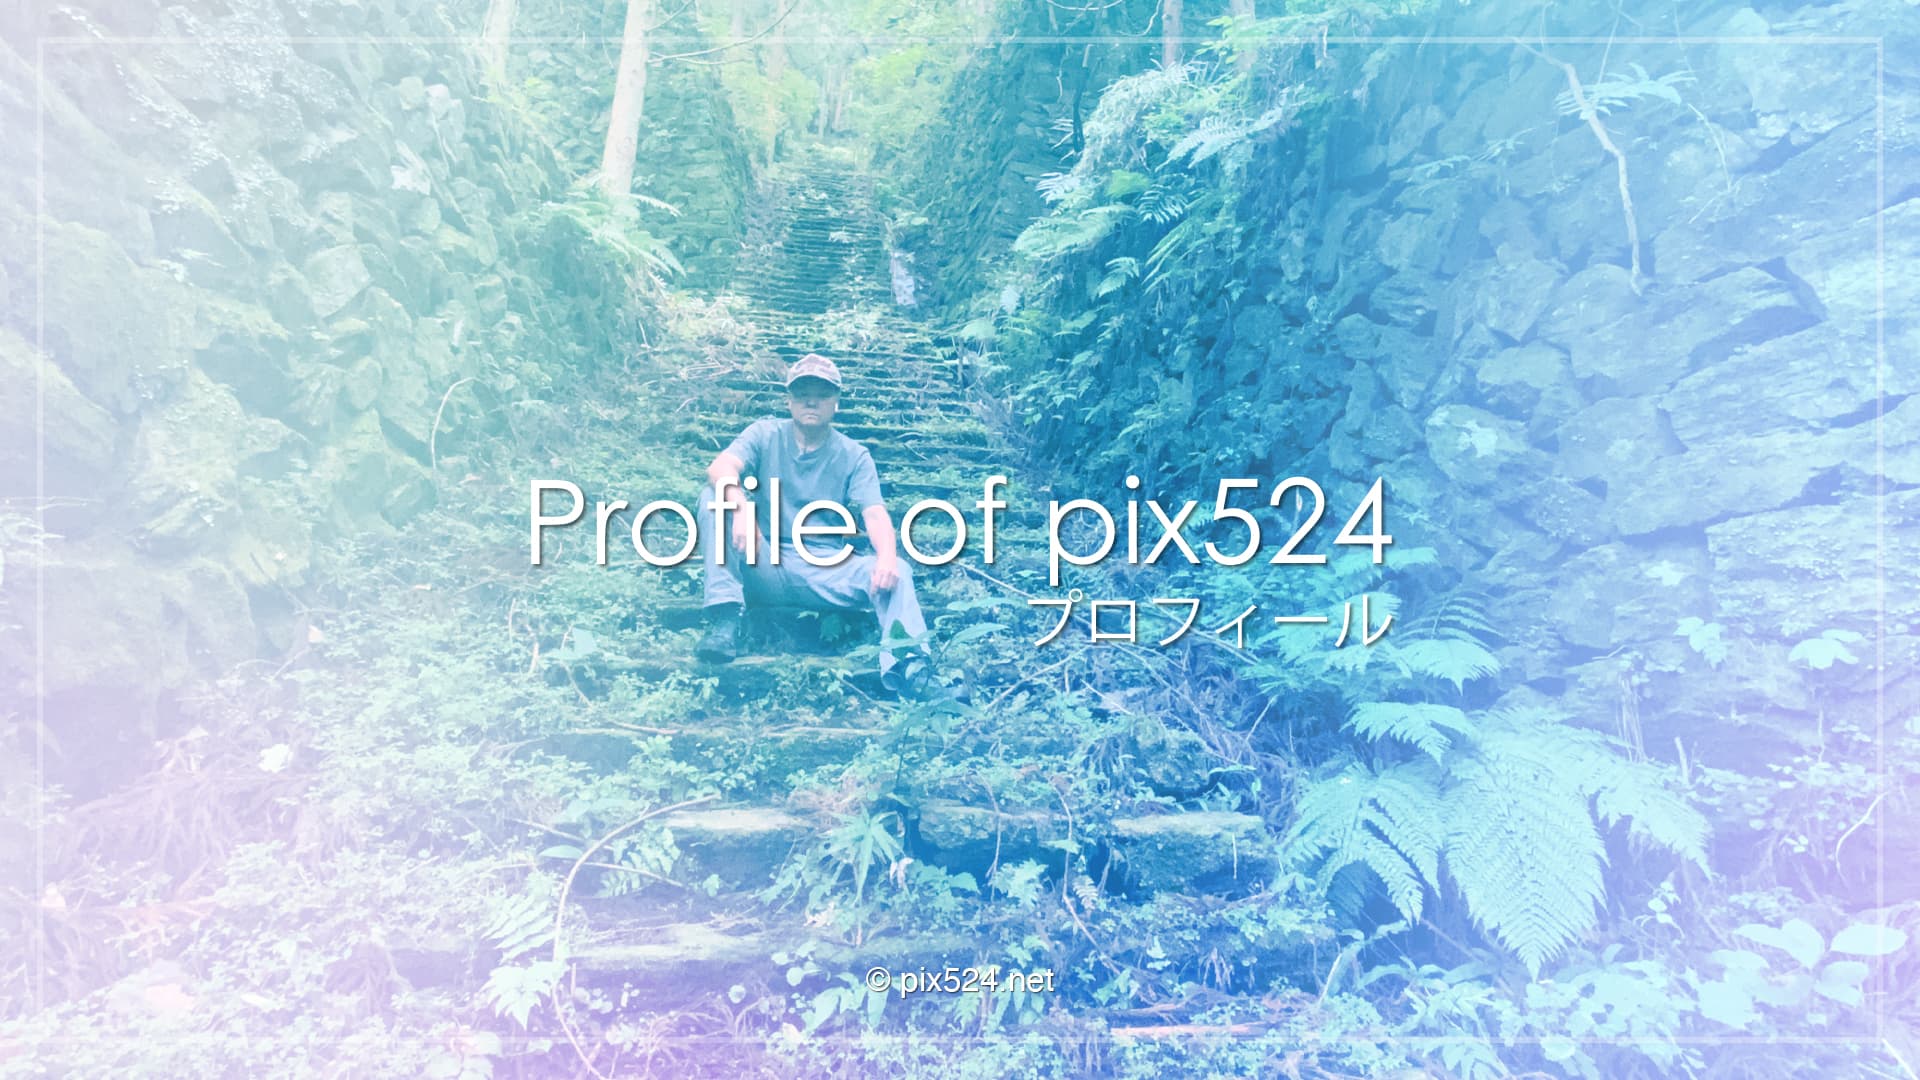 Profile of pix524